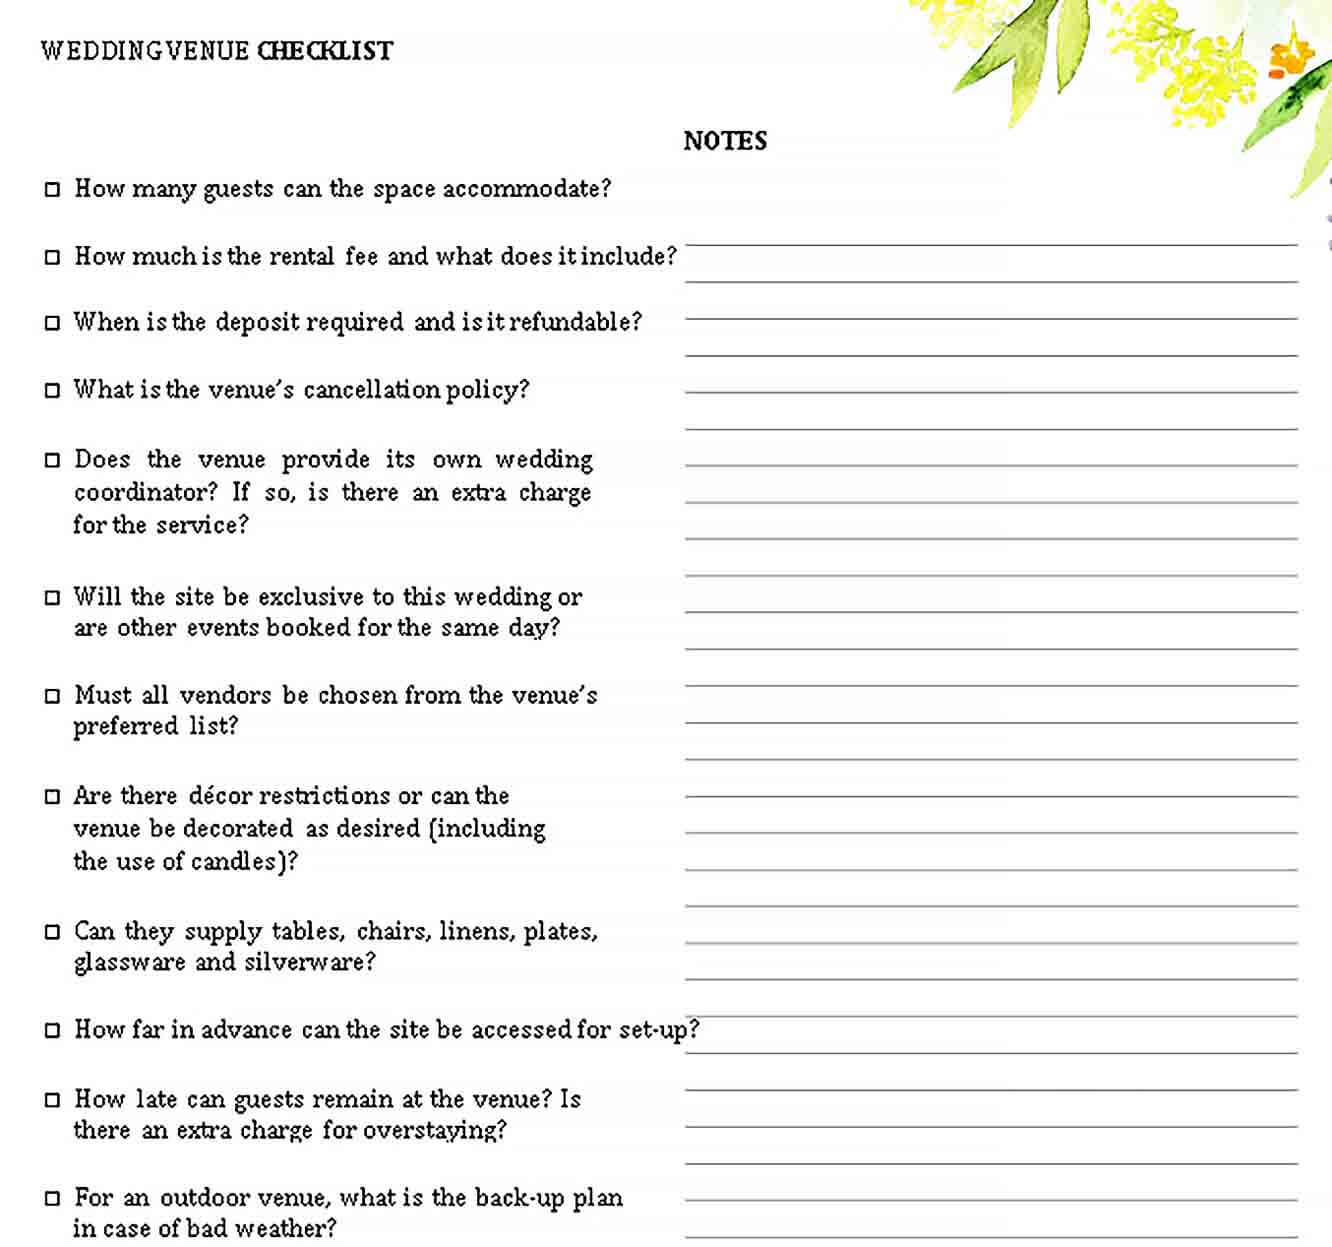 Venue Checklist Template  Within Venue Checklist Template For Wedding In Venue Checklist Template For Wedding